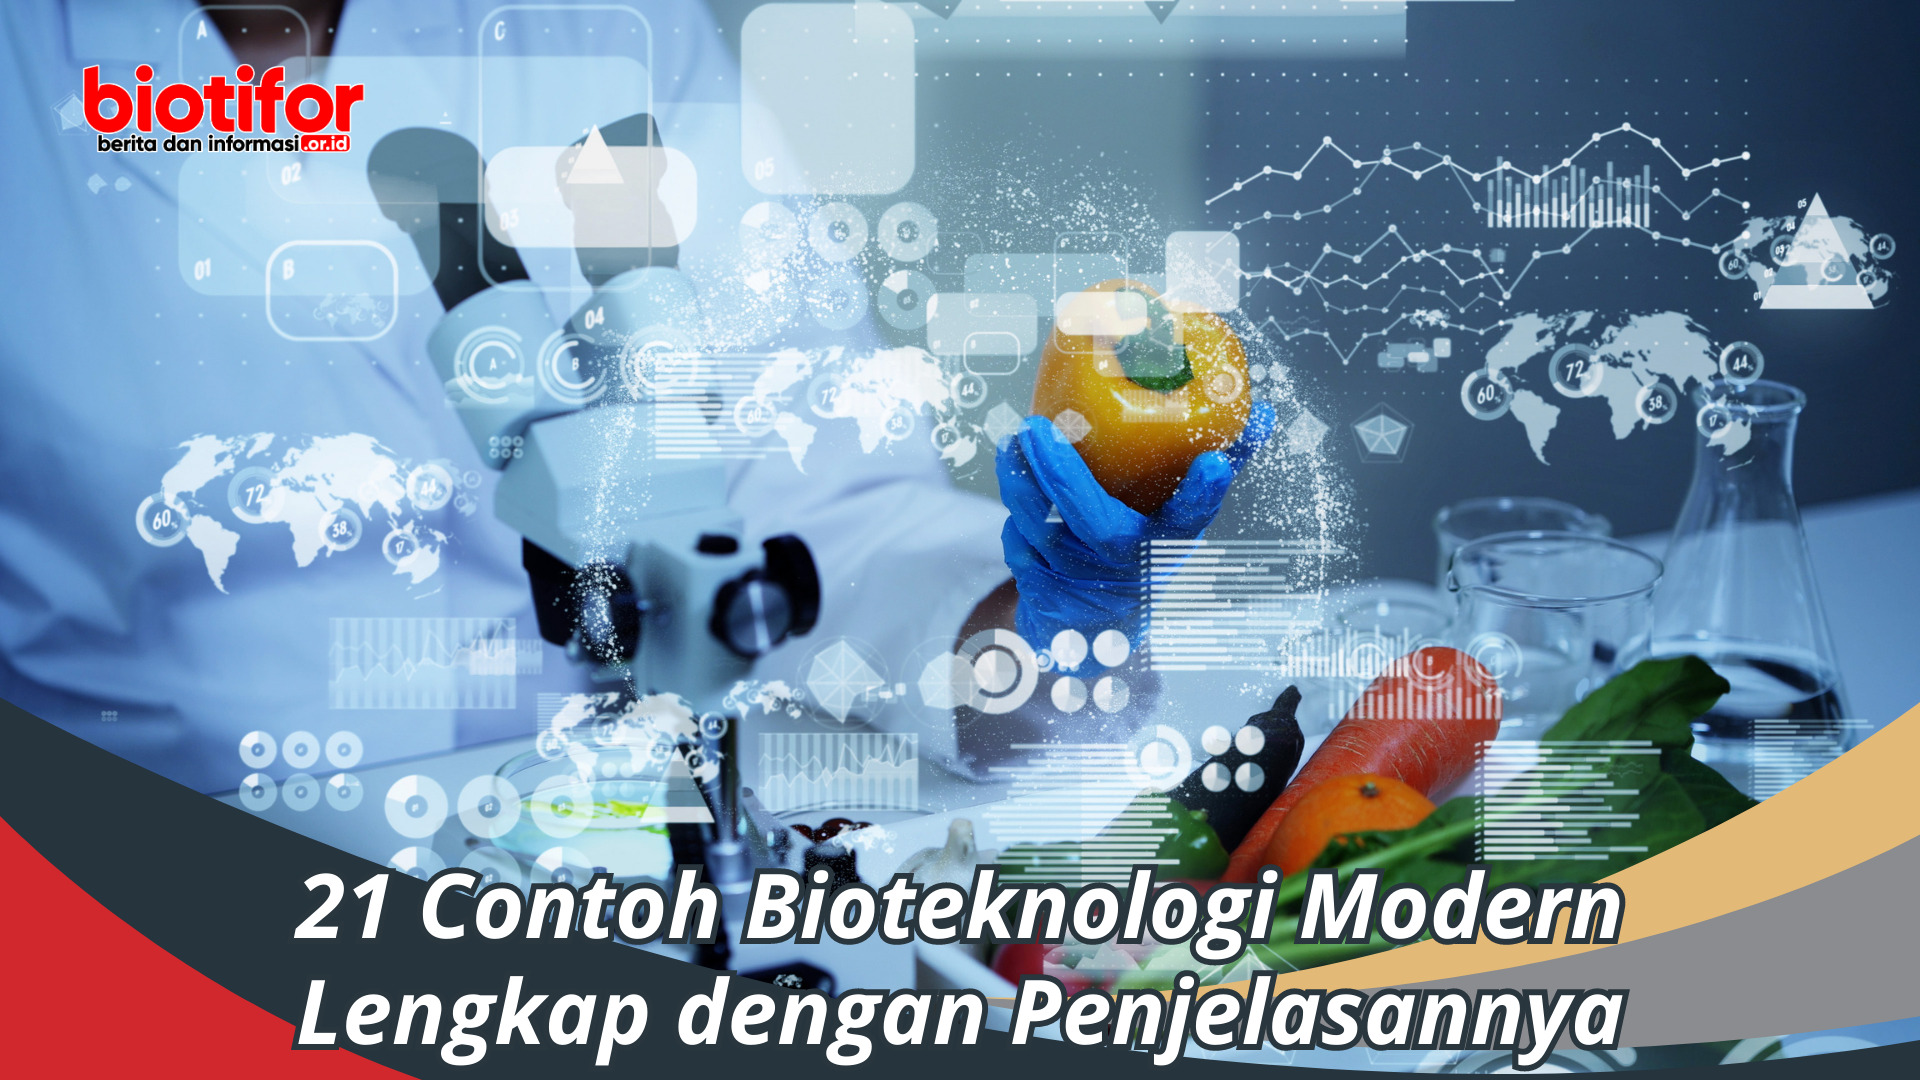 Contoh Bioteknologi Modern